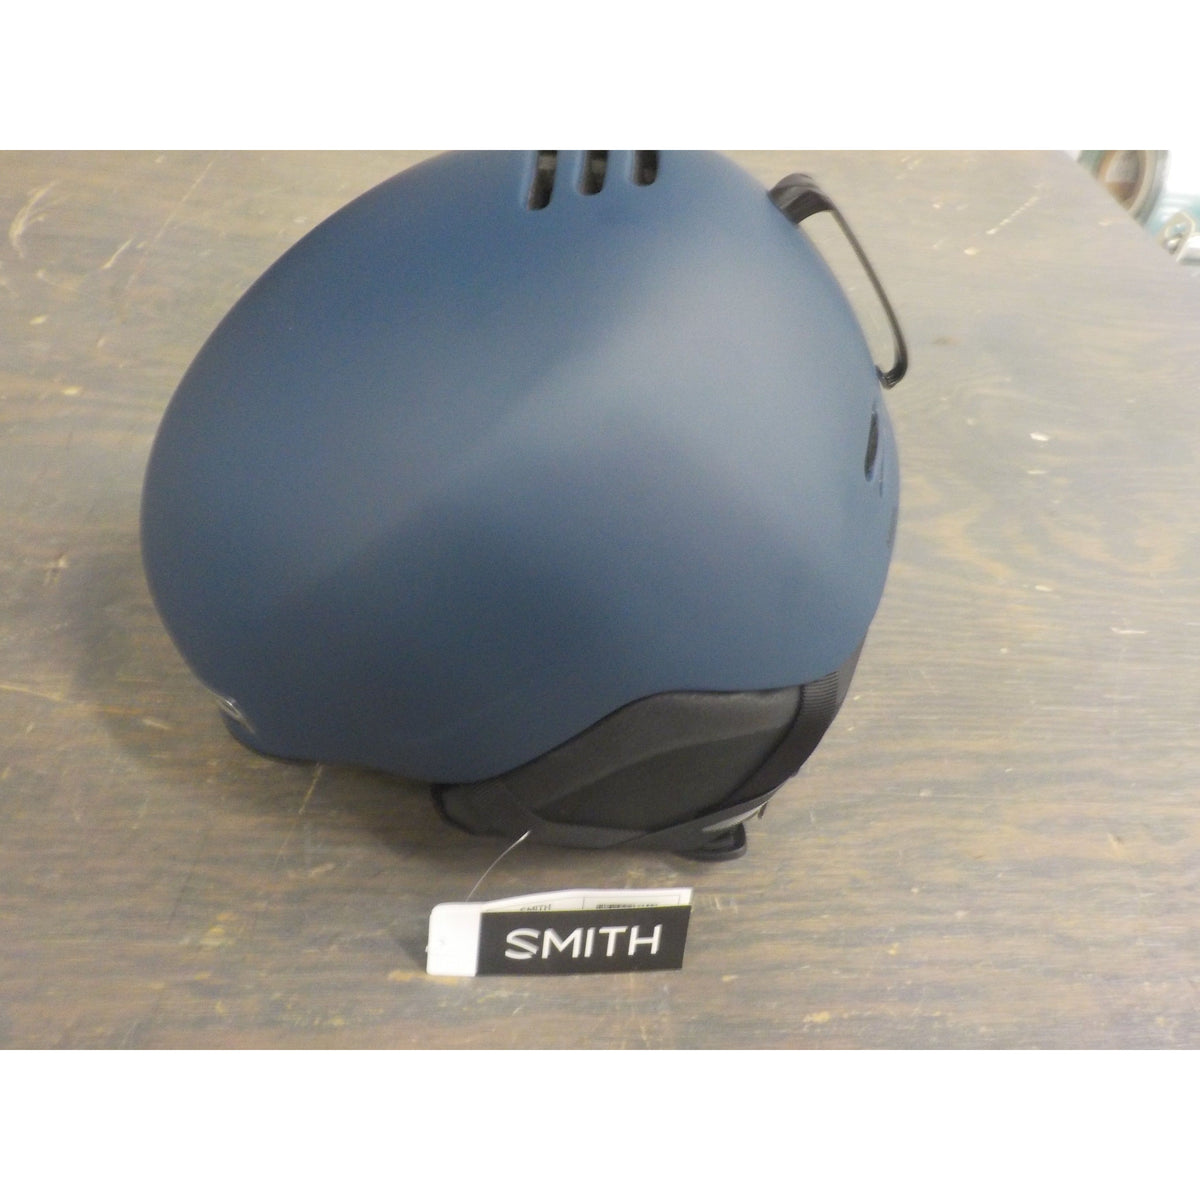 Smith Optics Maze Helmet - Matte French Navy - Large (59-63cm) - Used - Good